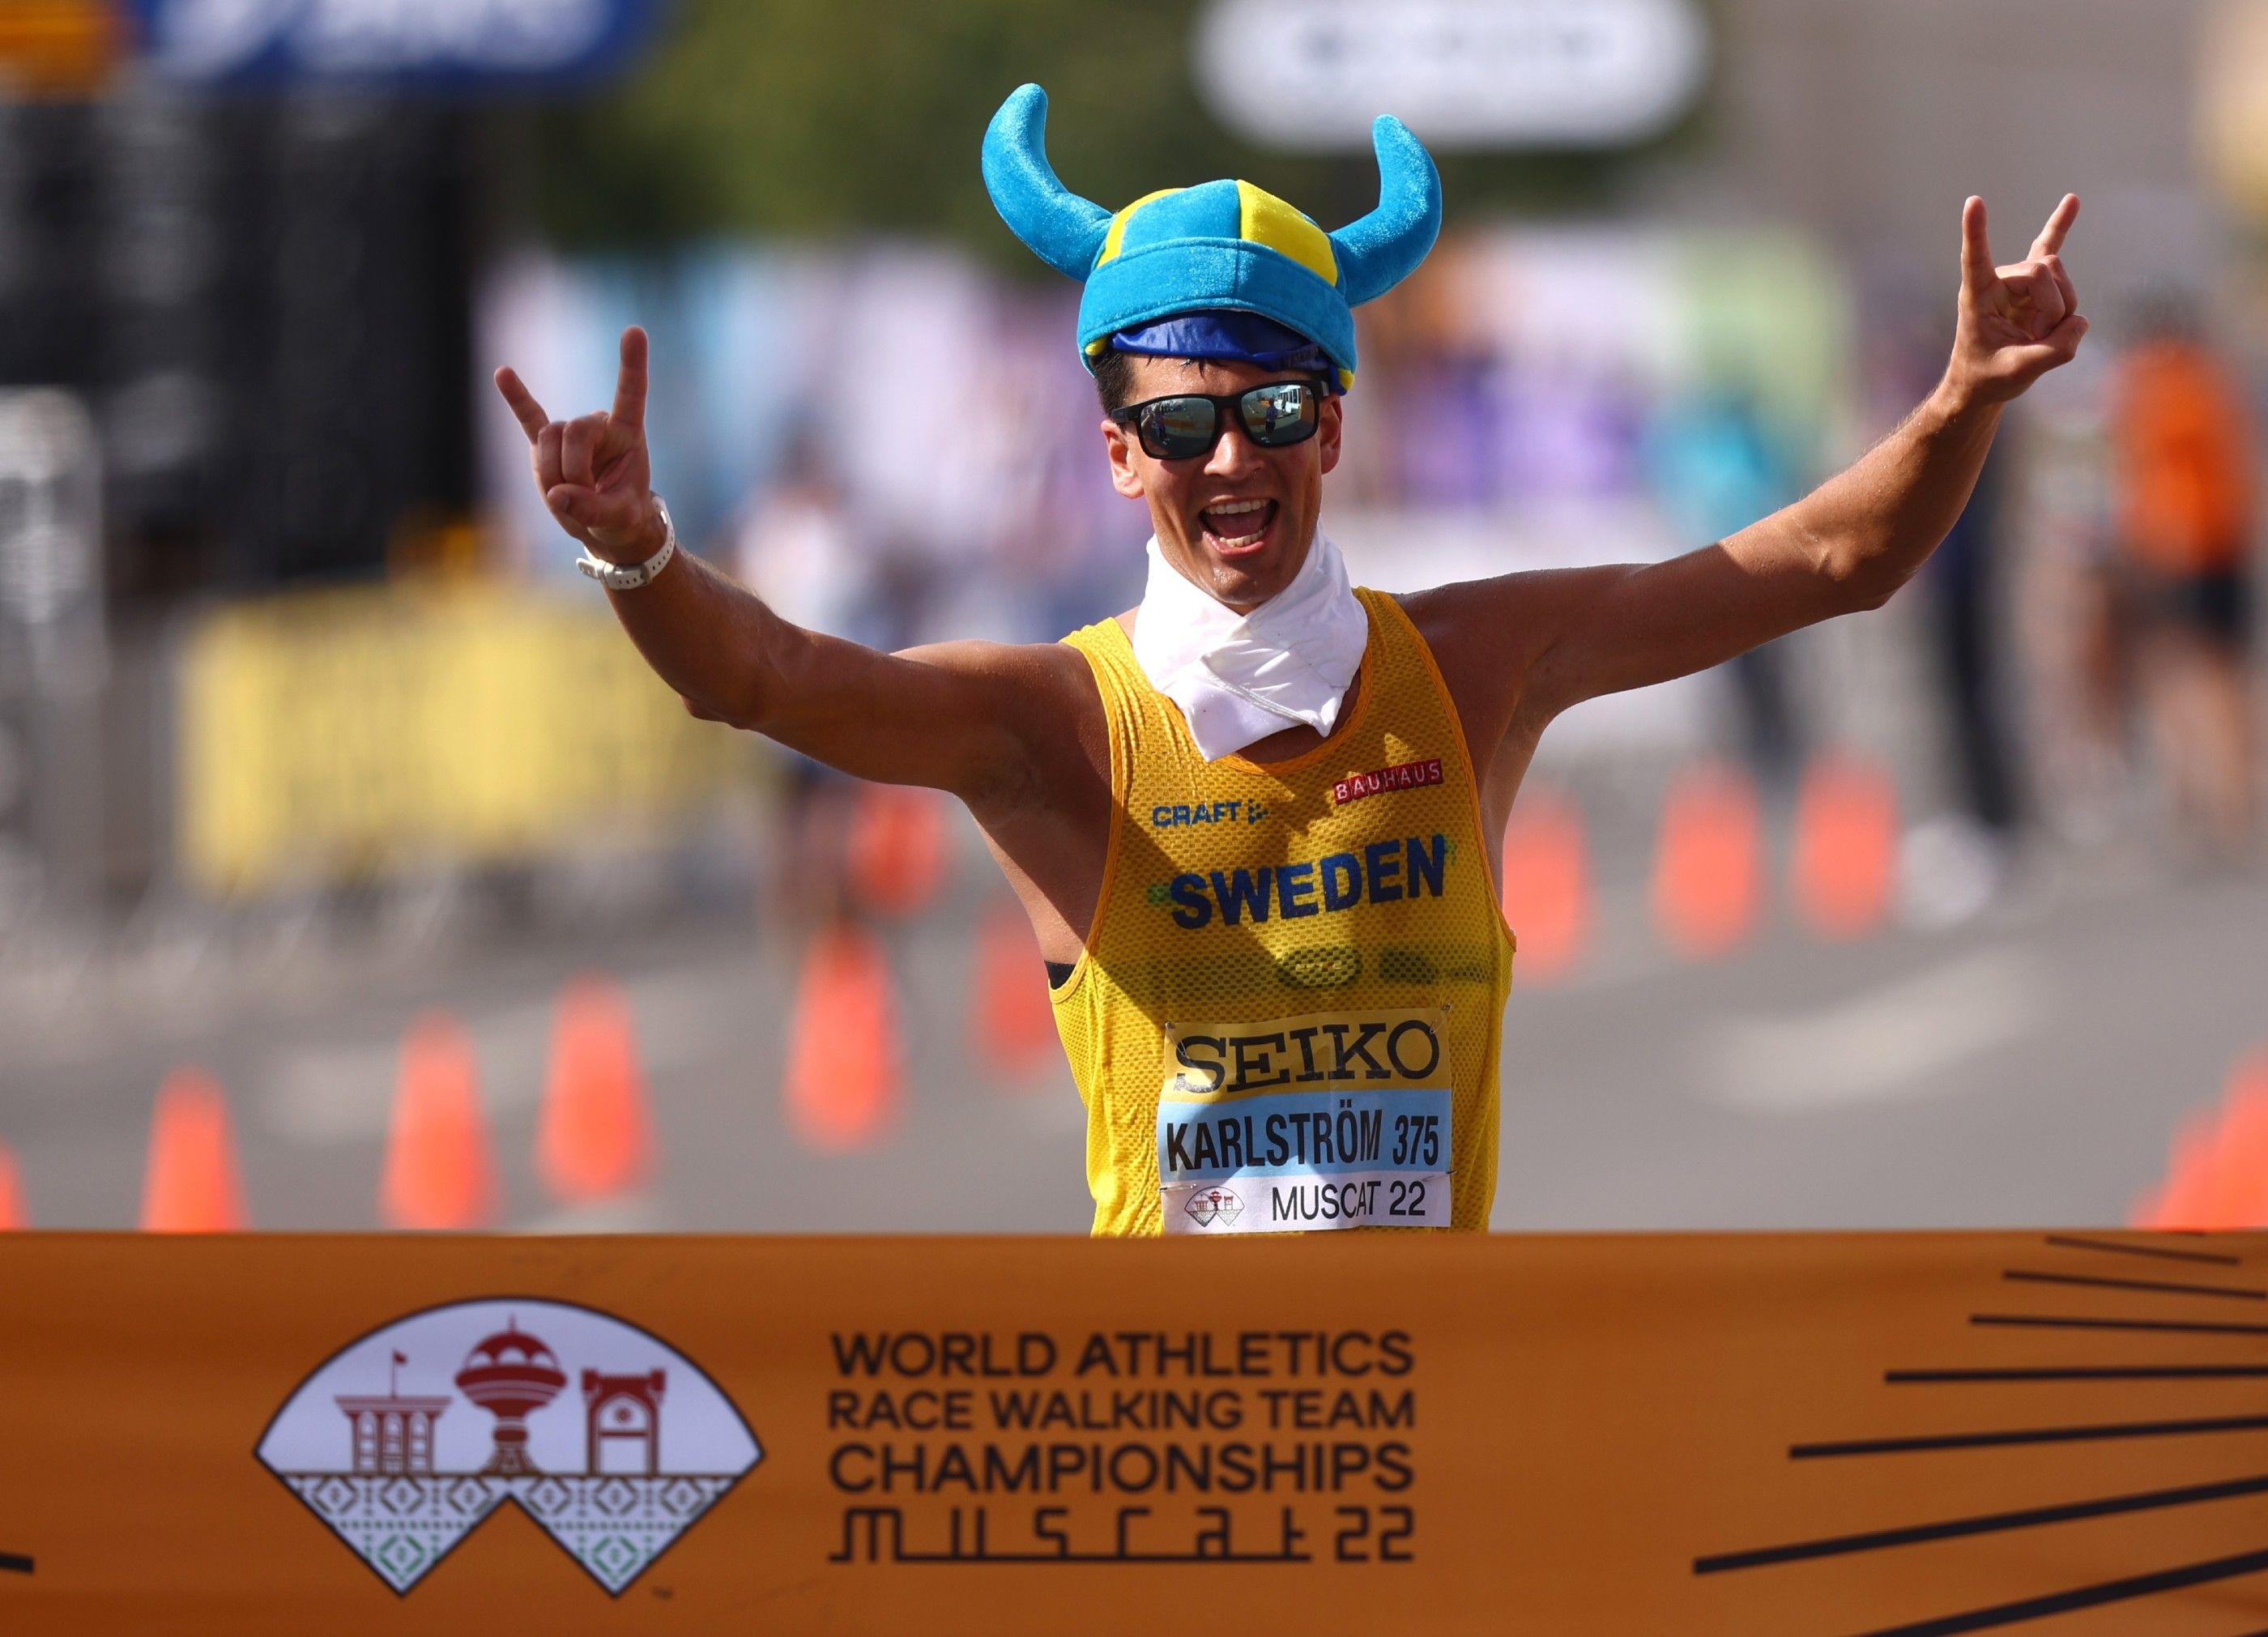 Perseus Karlstrom, Thrilling race walk, Madrid previews, World athletics, 2800x2030 HD Desktop